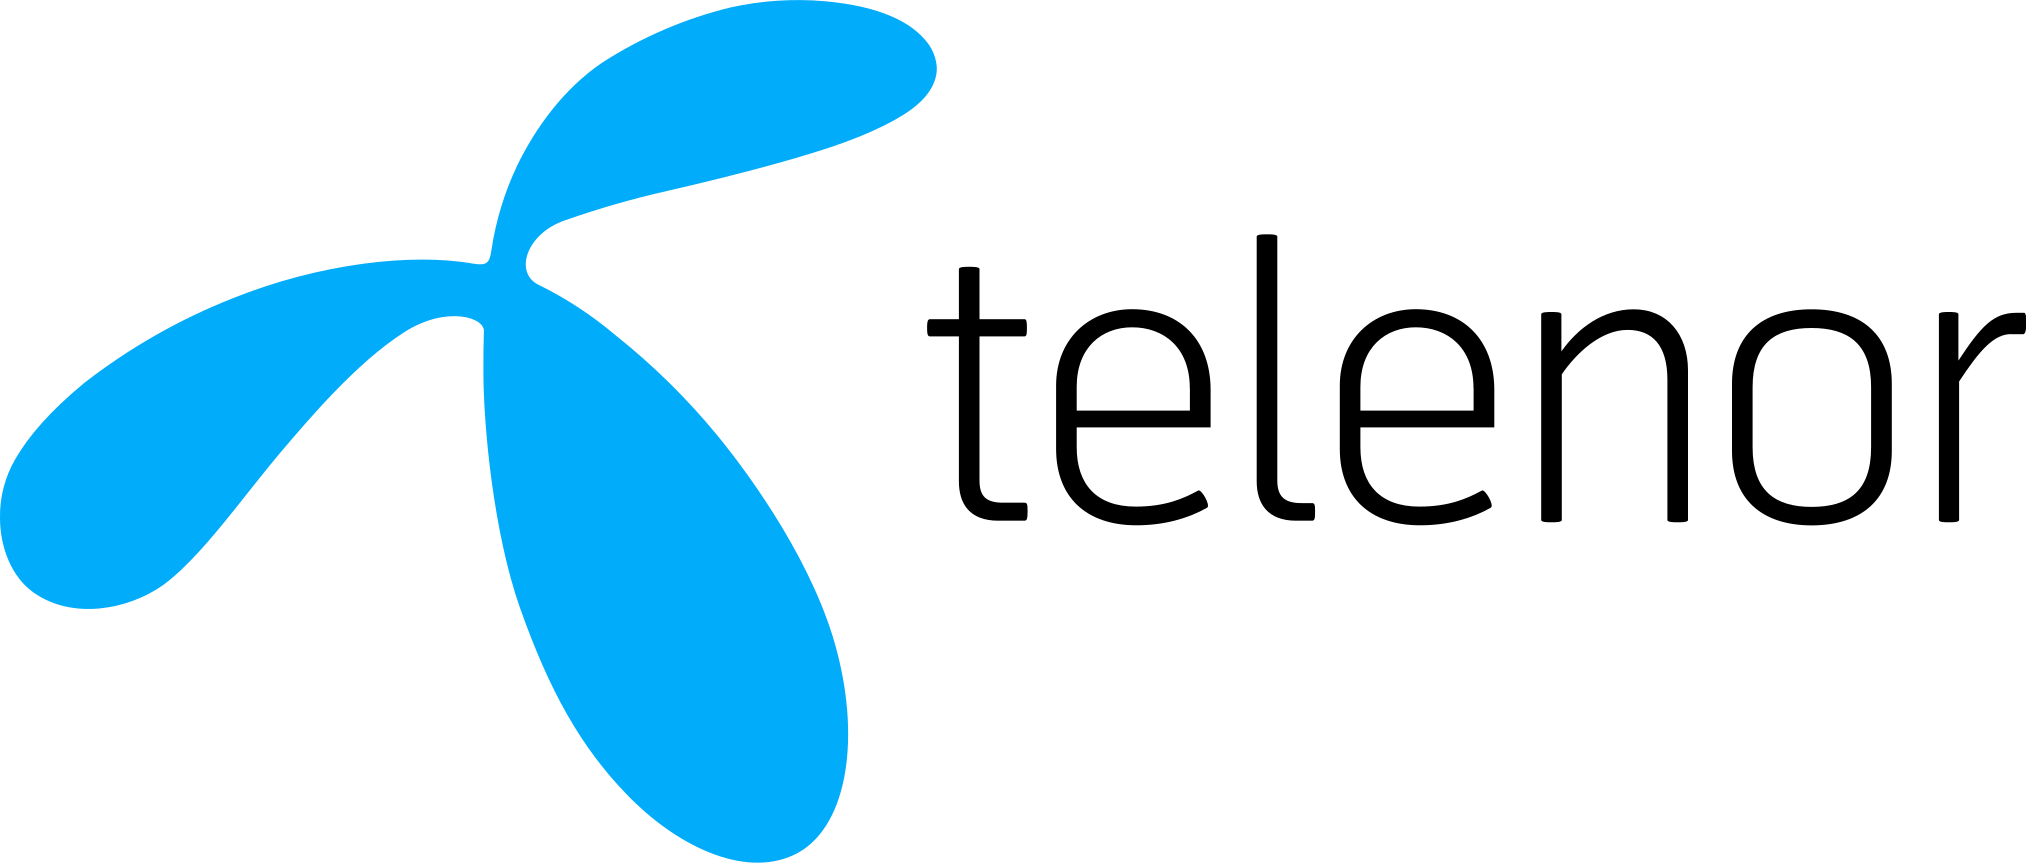 Telenor logotyp